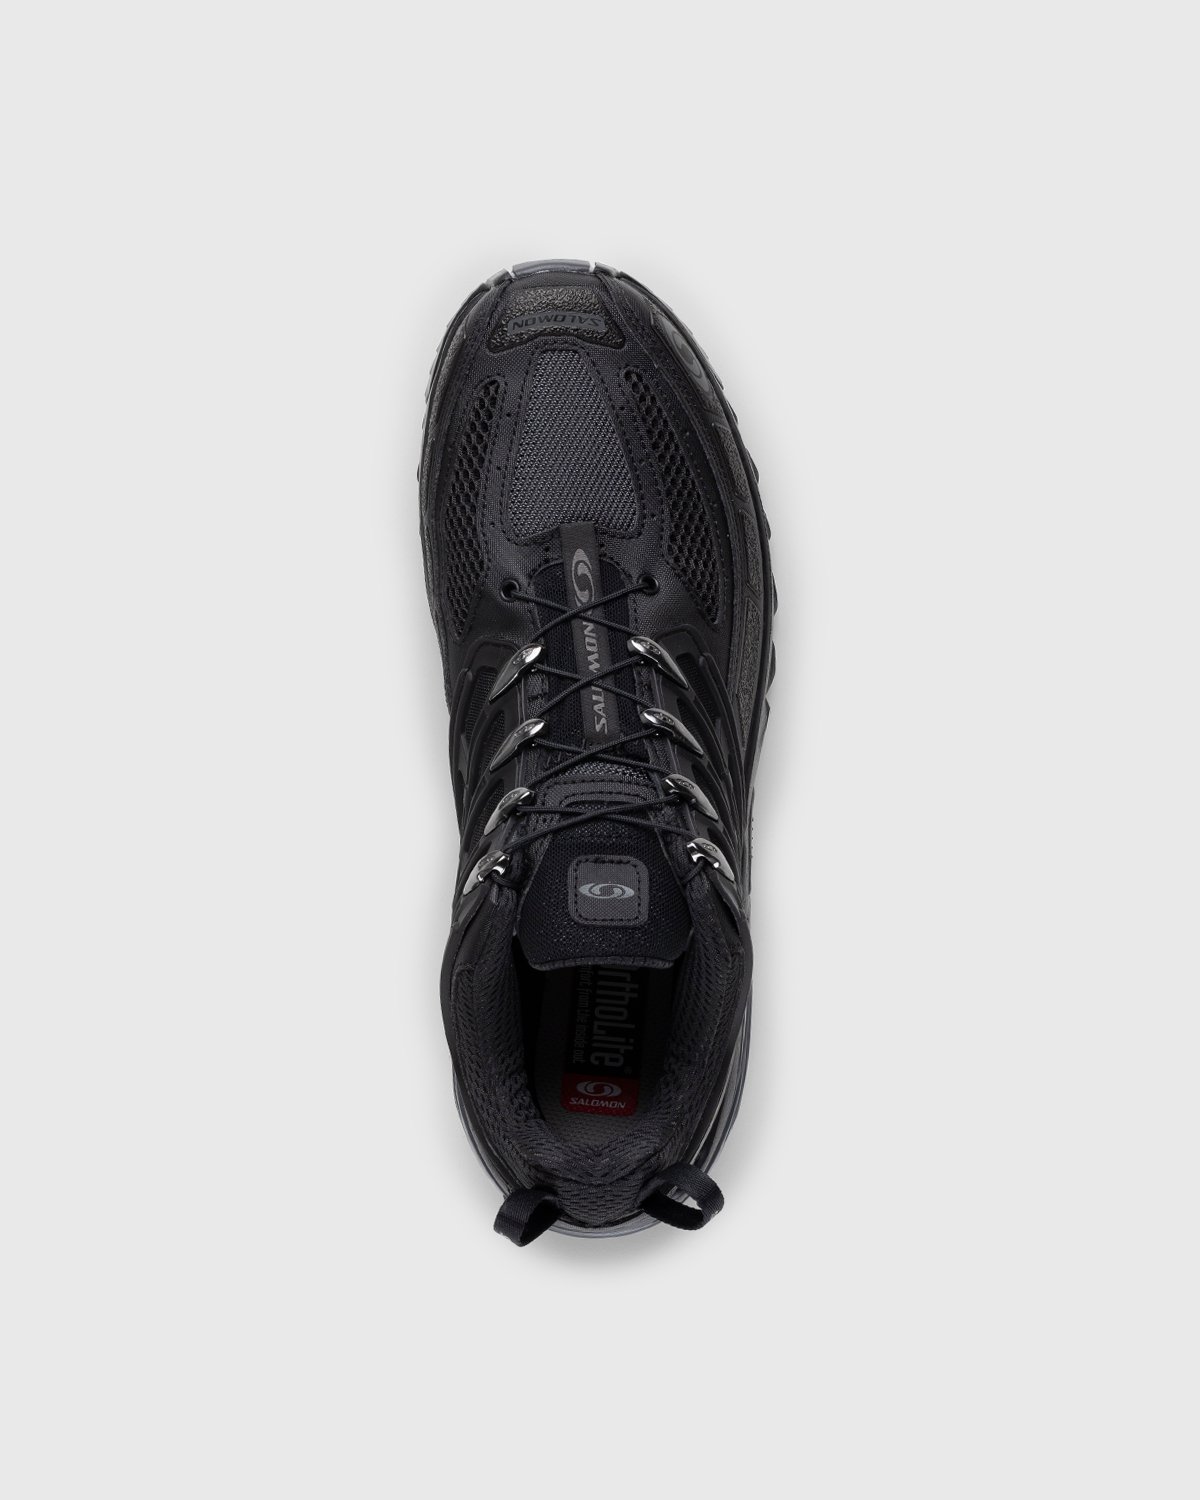 Salomon - ACS Pro Advanced Black - Footwear - Black - Image 5